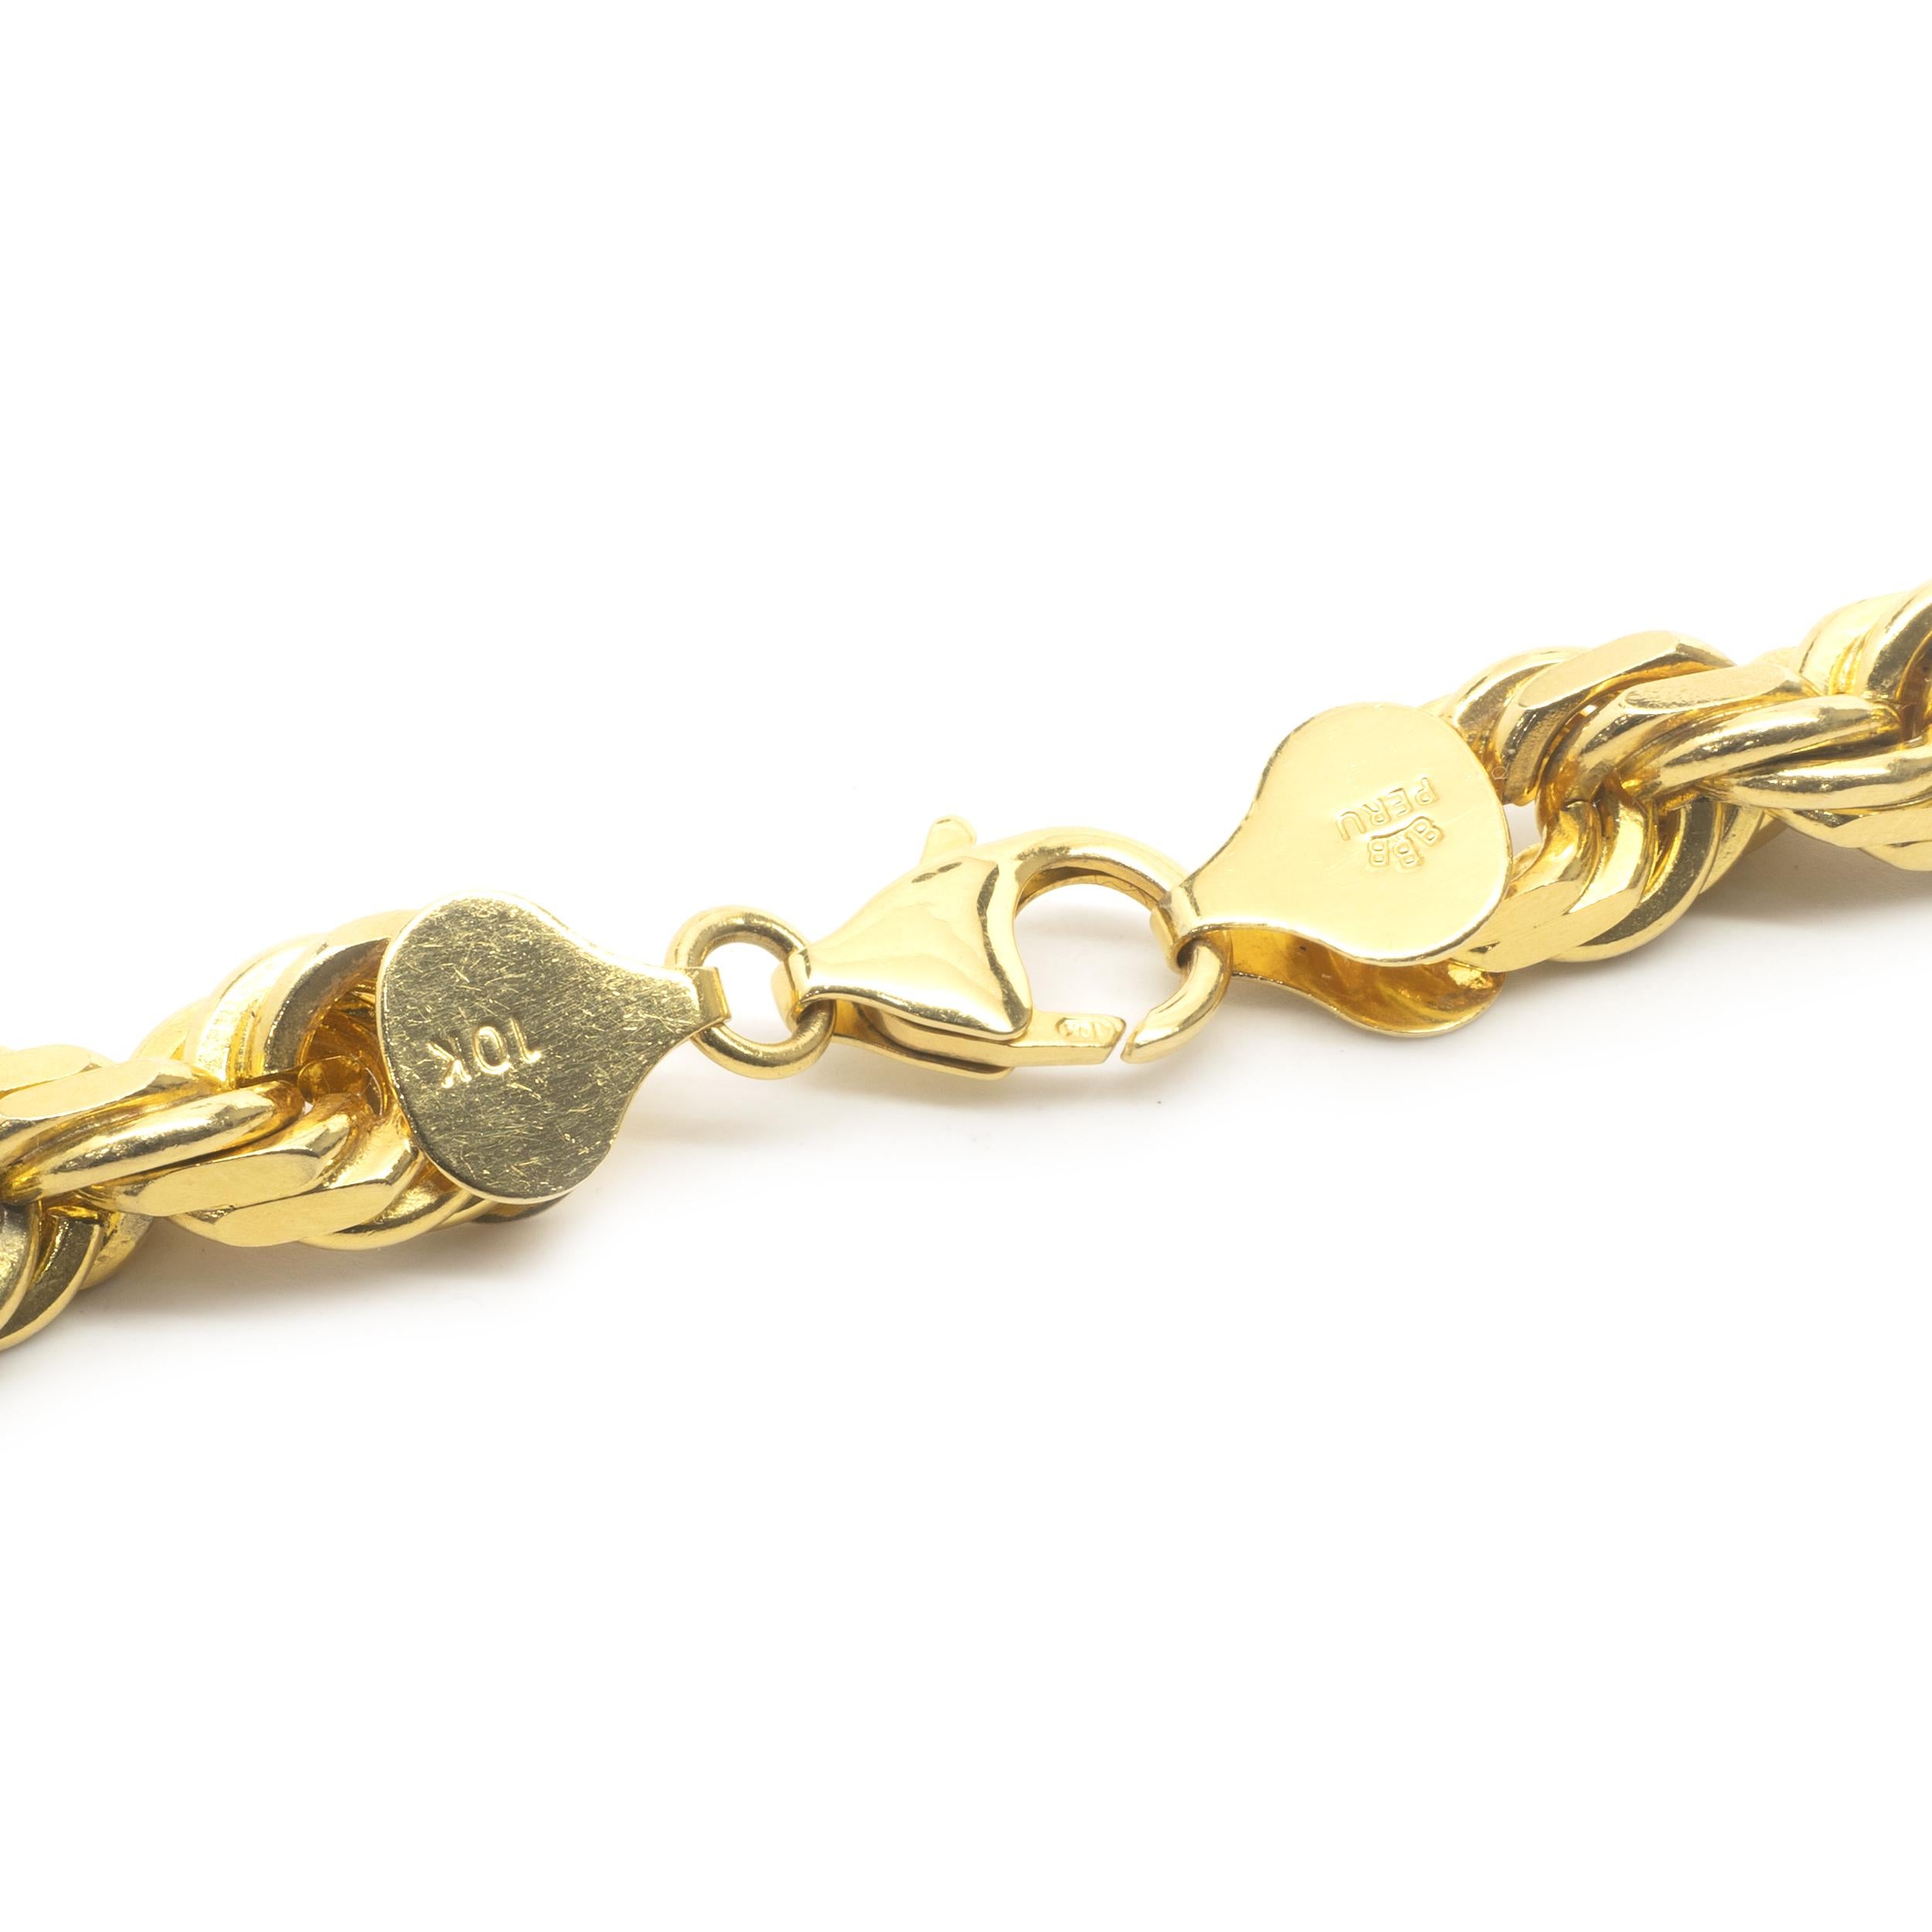 10 karat gold rope chain